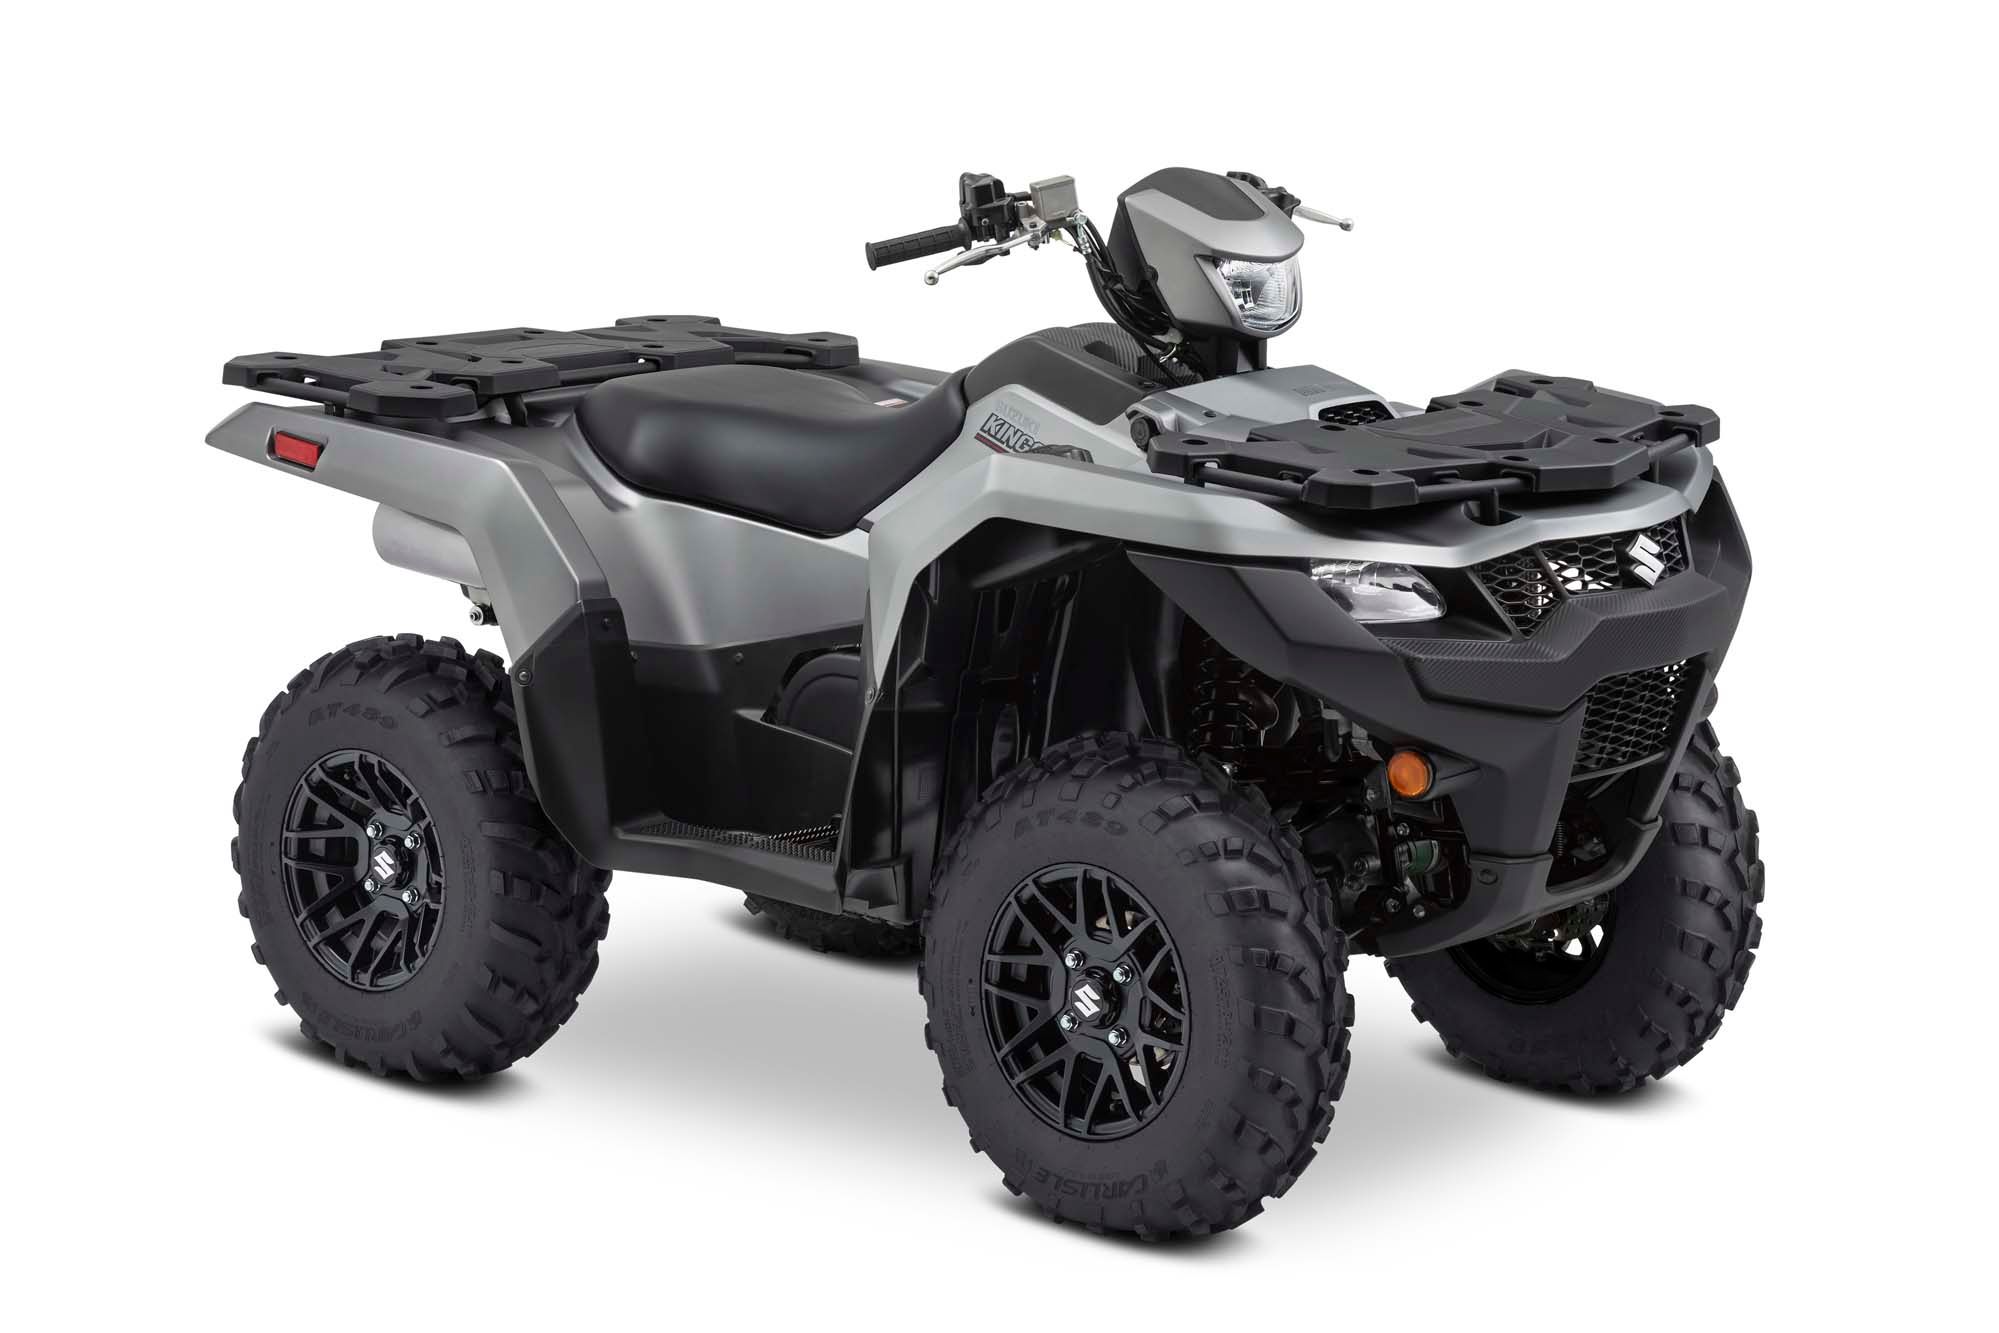 2022 Kingquad 750 and 500 ATVs